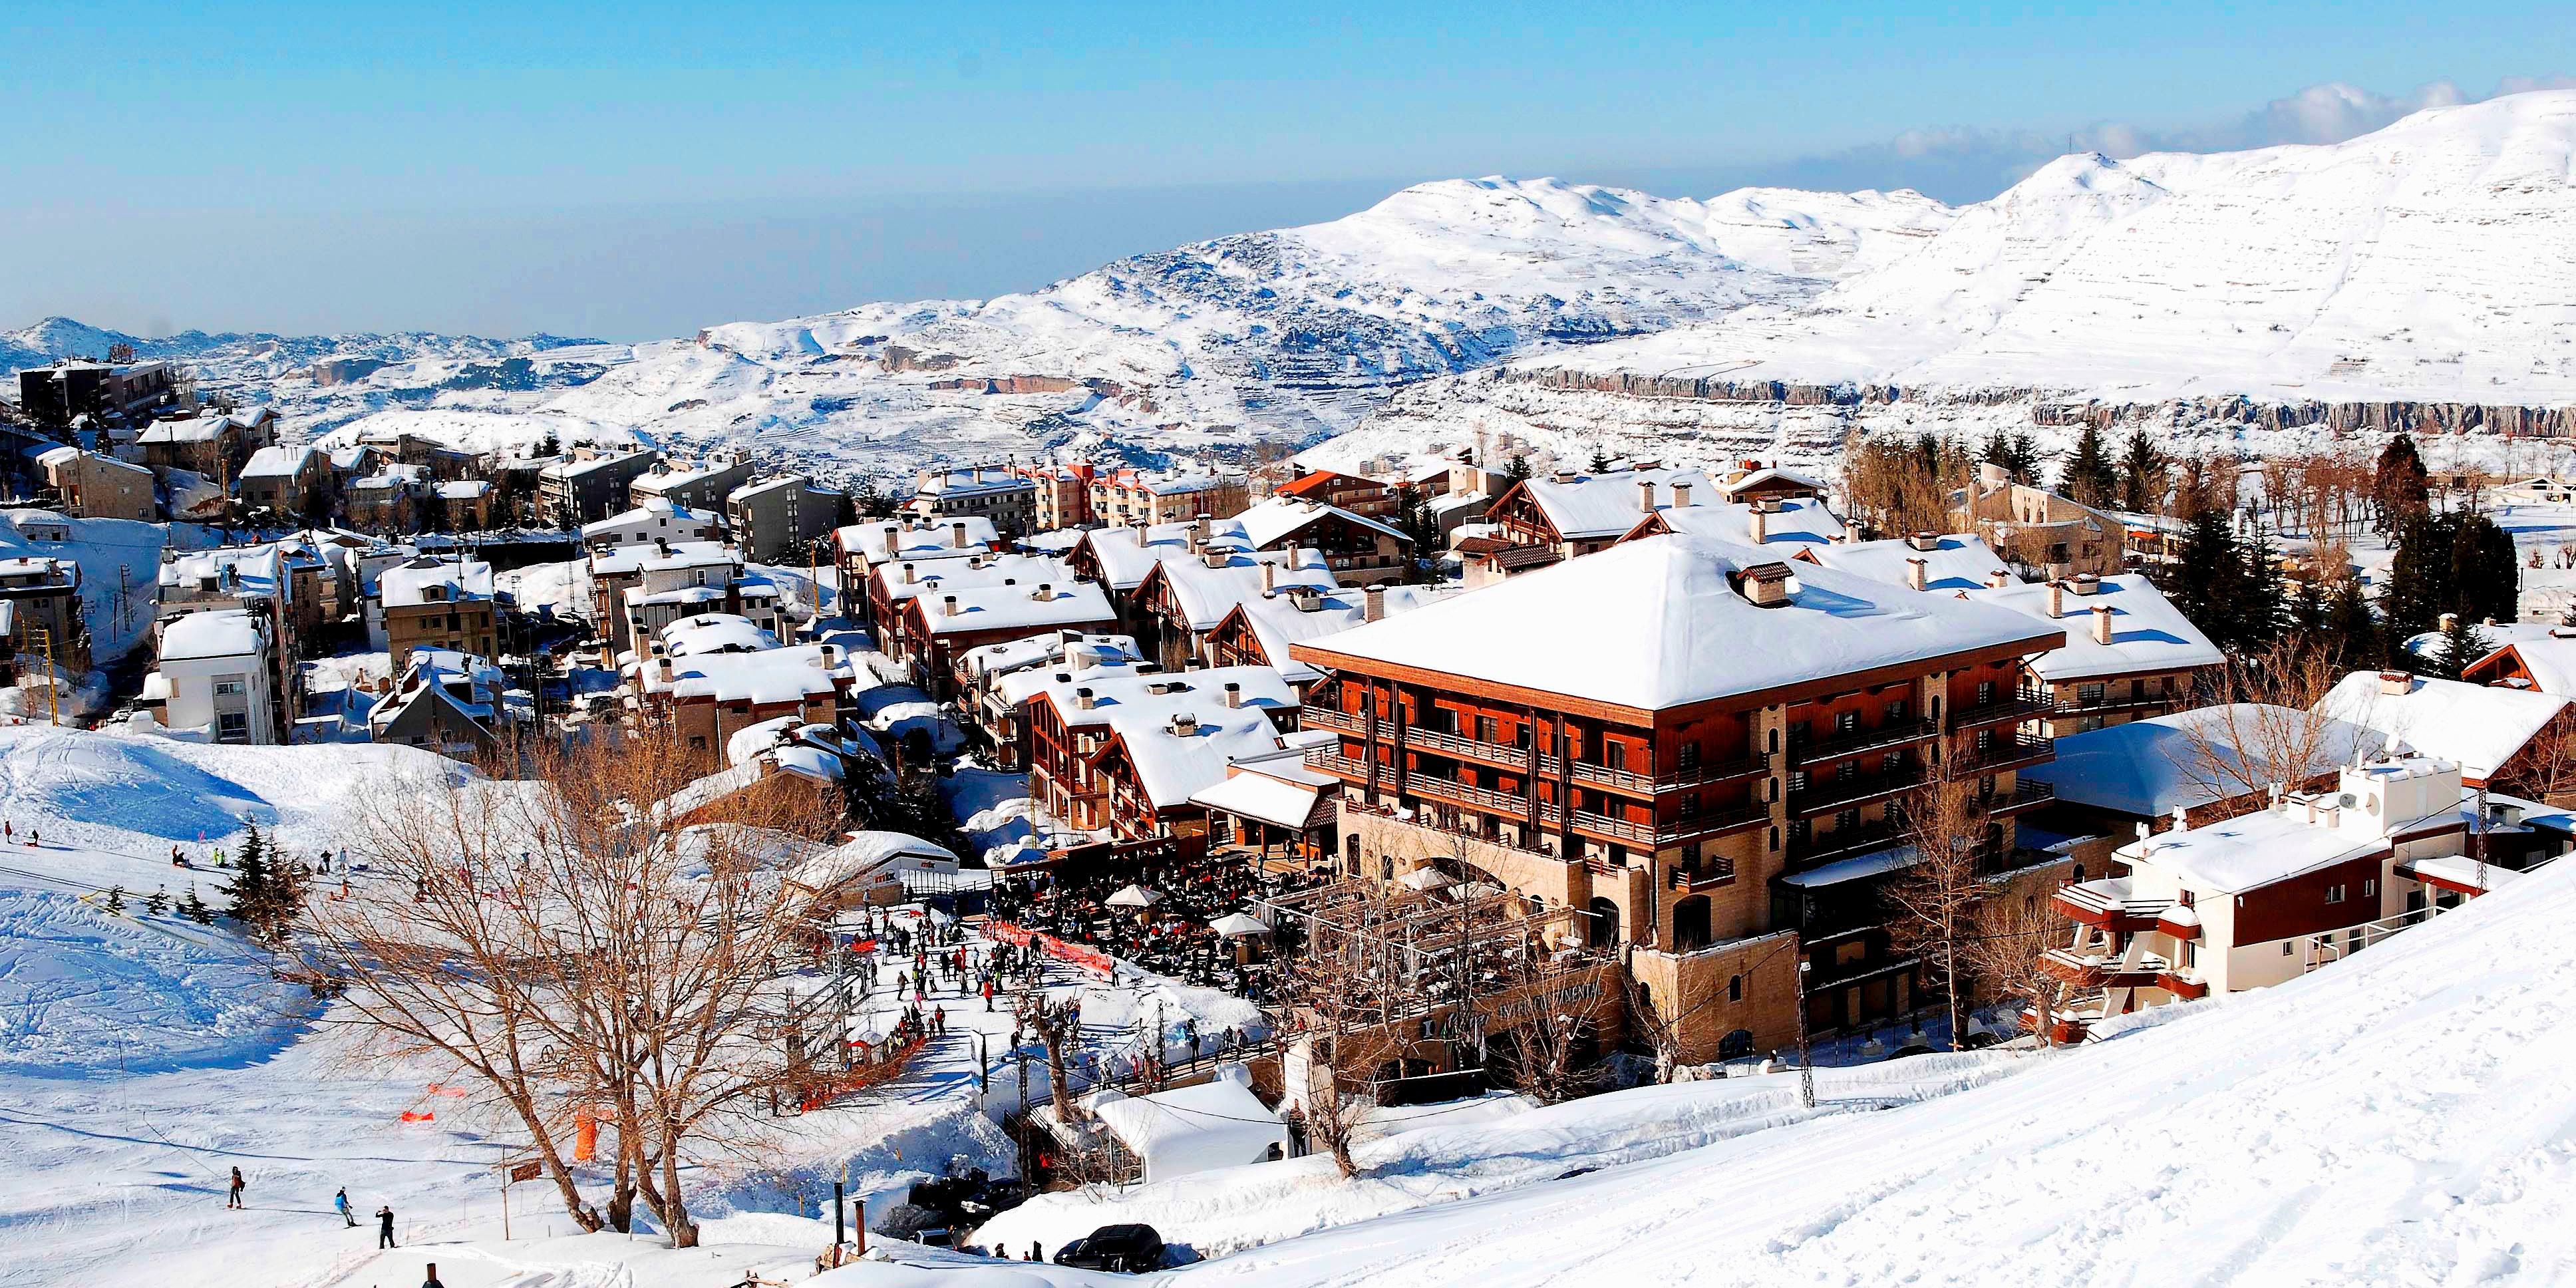 Hit the ski slopes directly from the hotel terrace to enjoy 80 km of ski tracks at Mzaar Ski Resort.